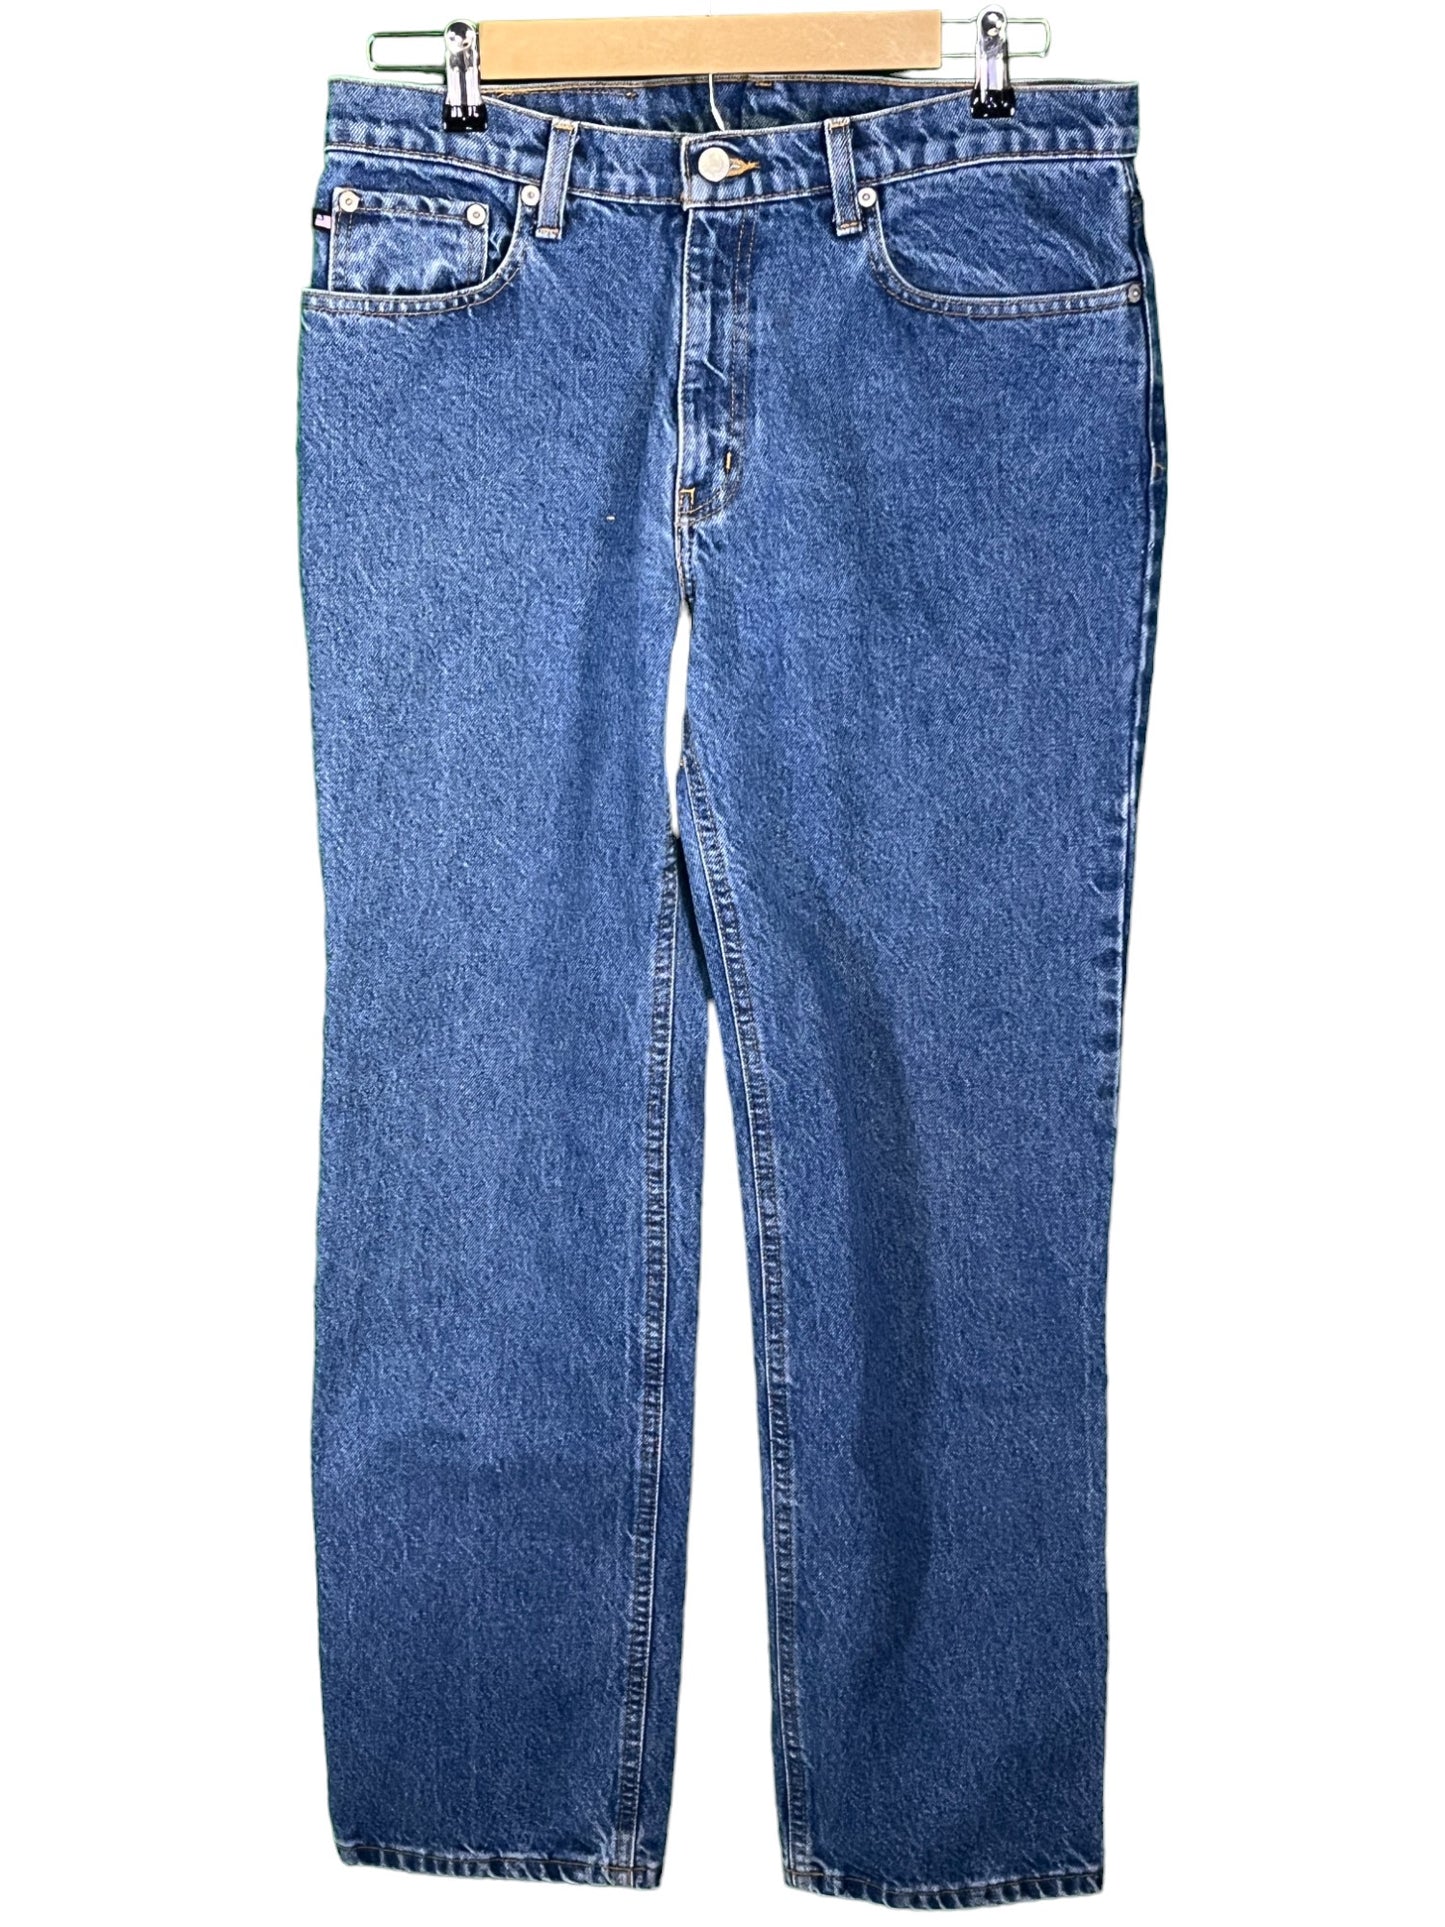 Vintage 90's Polo Ralph Lauren Medium Wash Denim Jeans Size 32x31